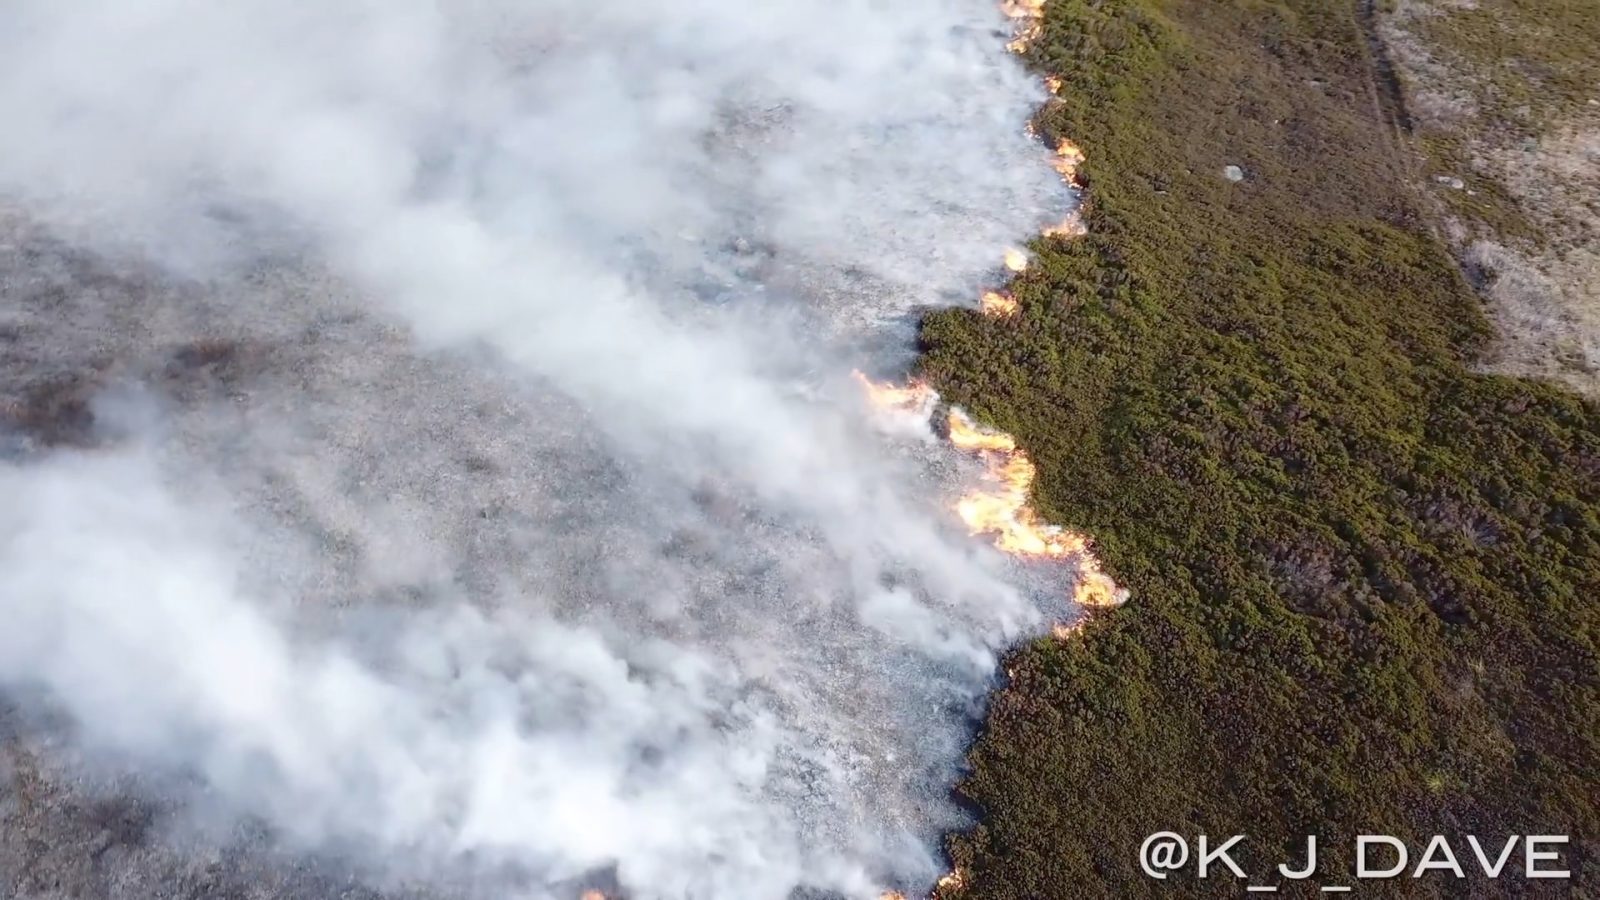 Drone footage of fire during UK heatwave shows massive destruction